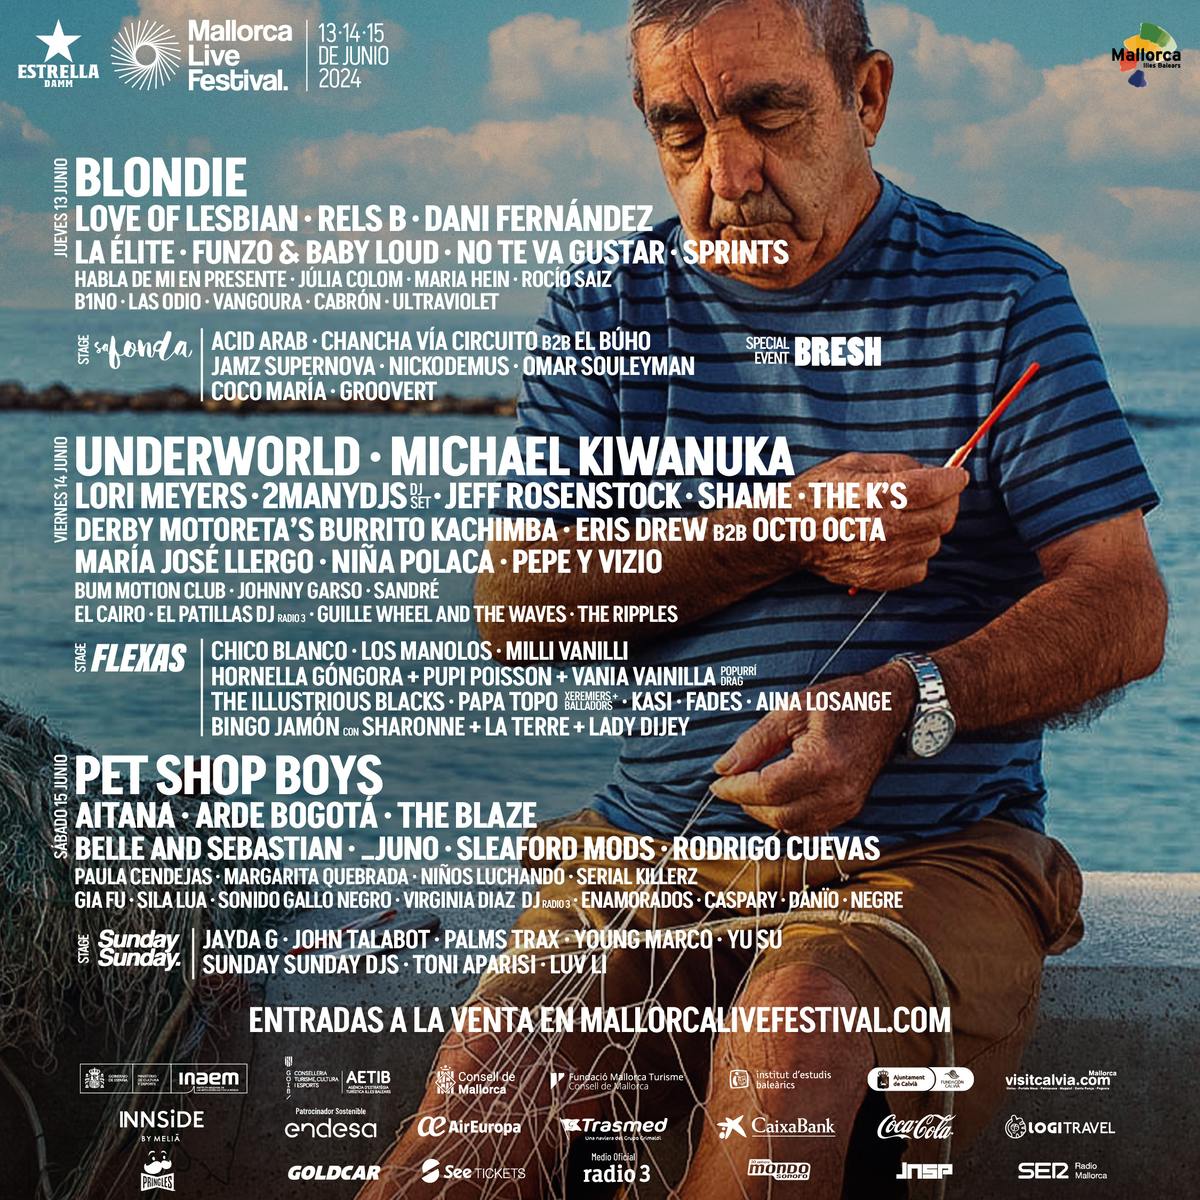 Weekender (Friday+Saturday) Ticket Mallorca Live Festival 2024